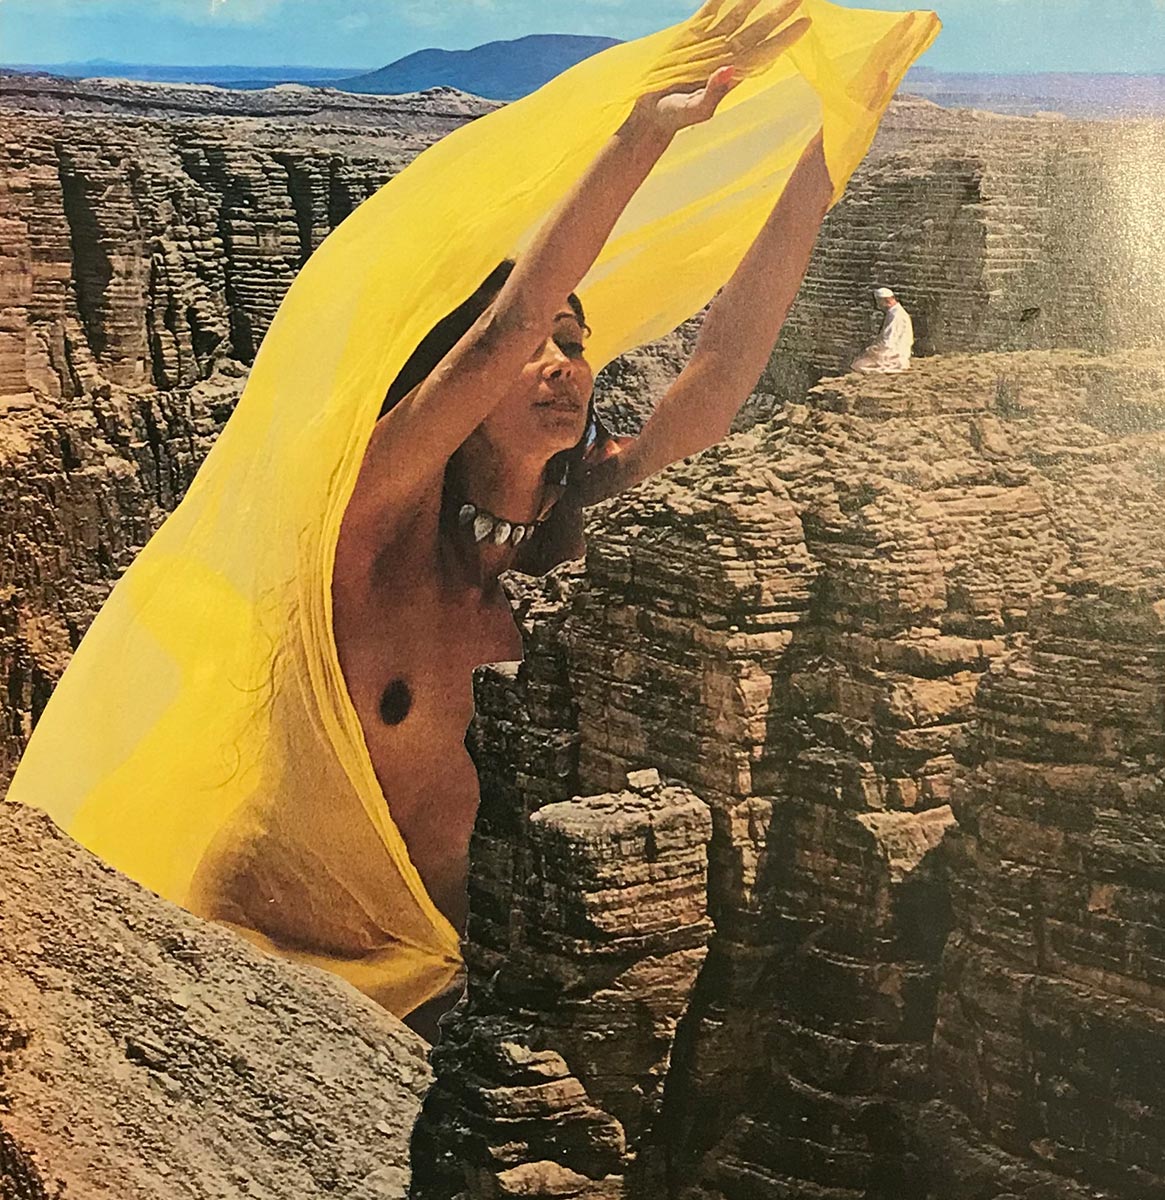 Javier Artica, Velo amarillo. 2019, collage sur papier, 21 x 21 cm.